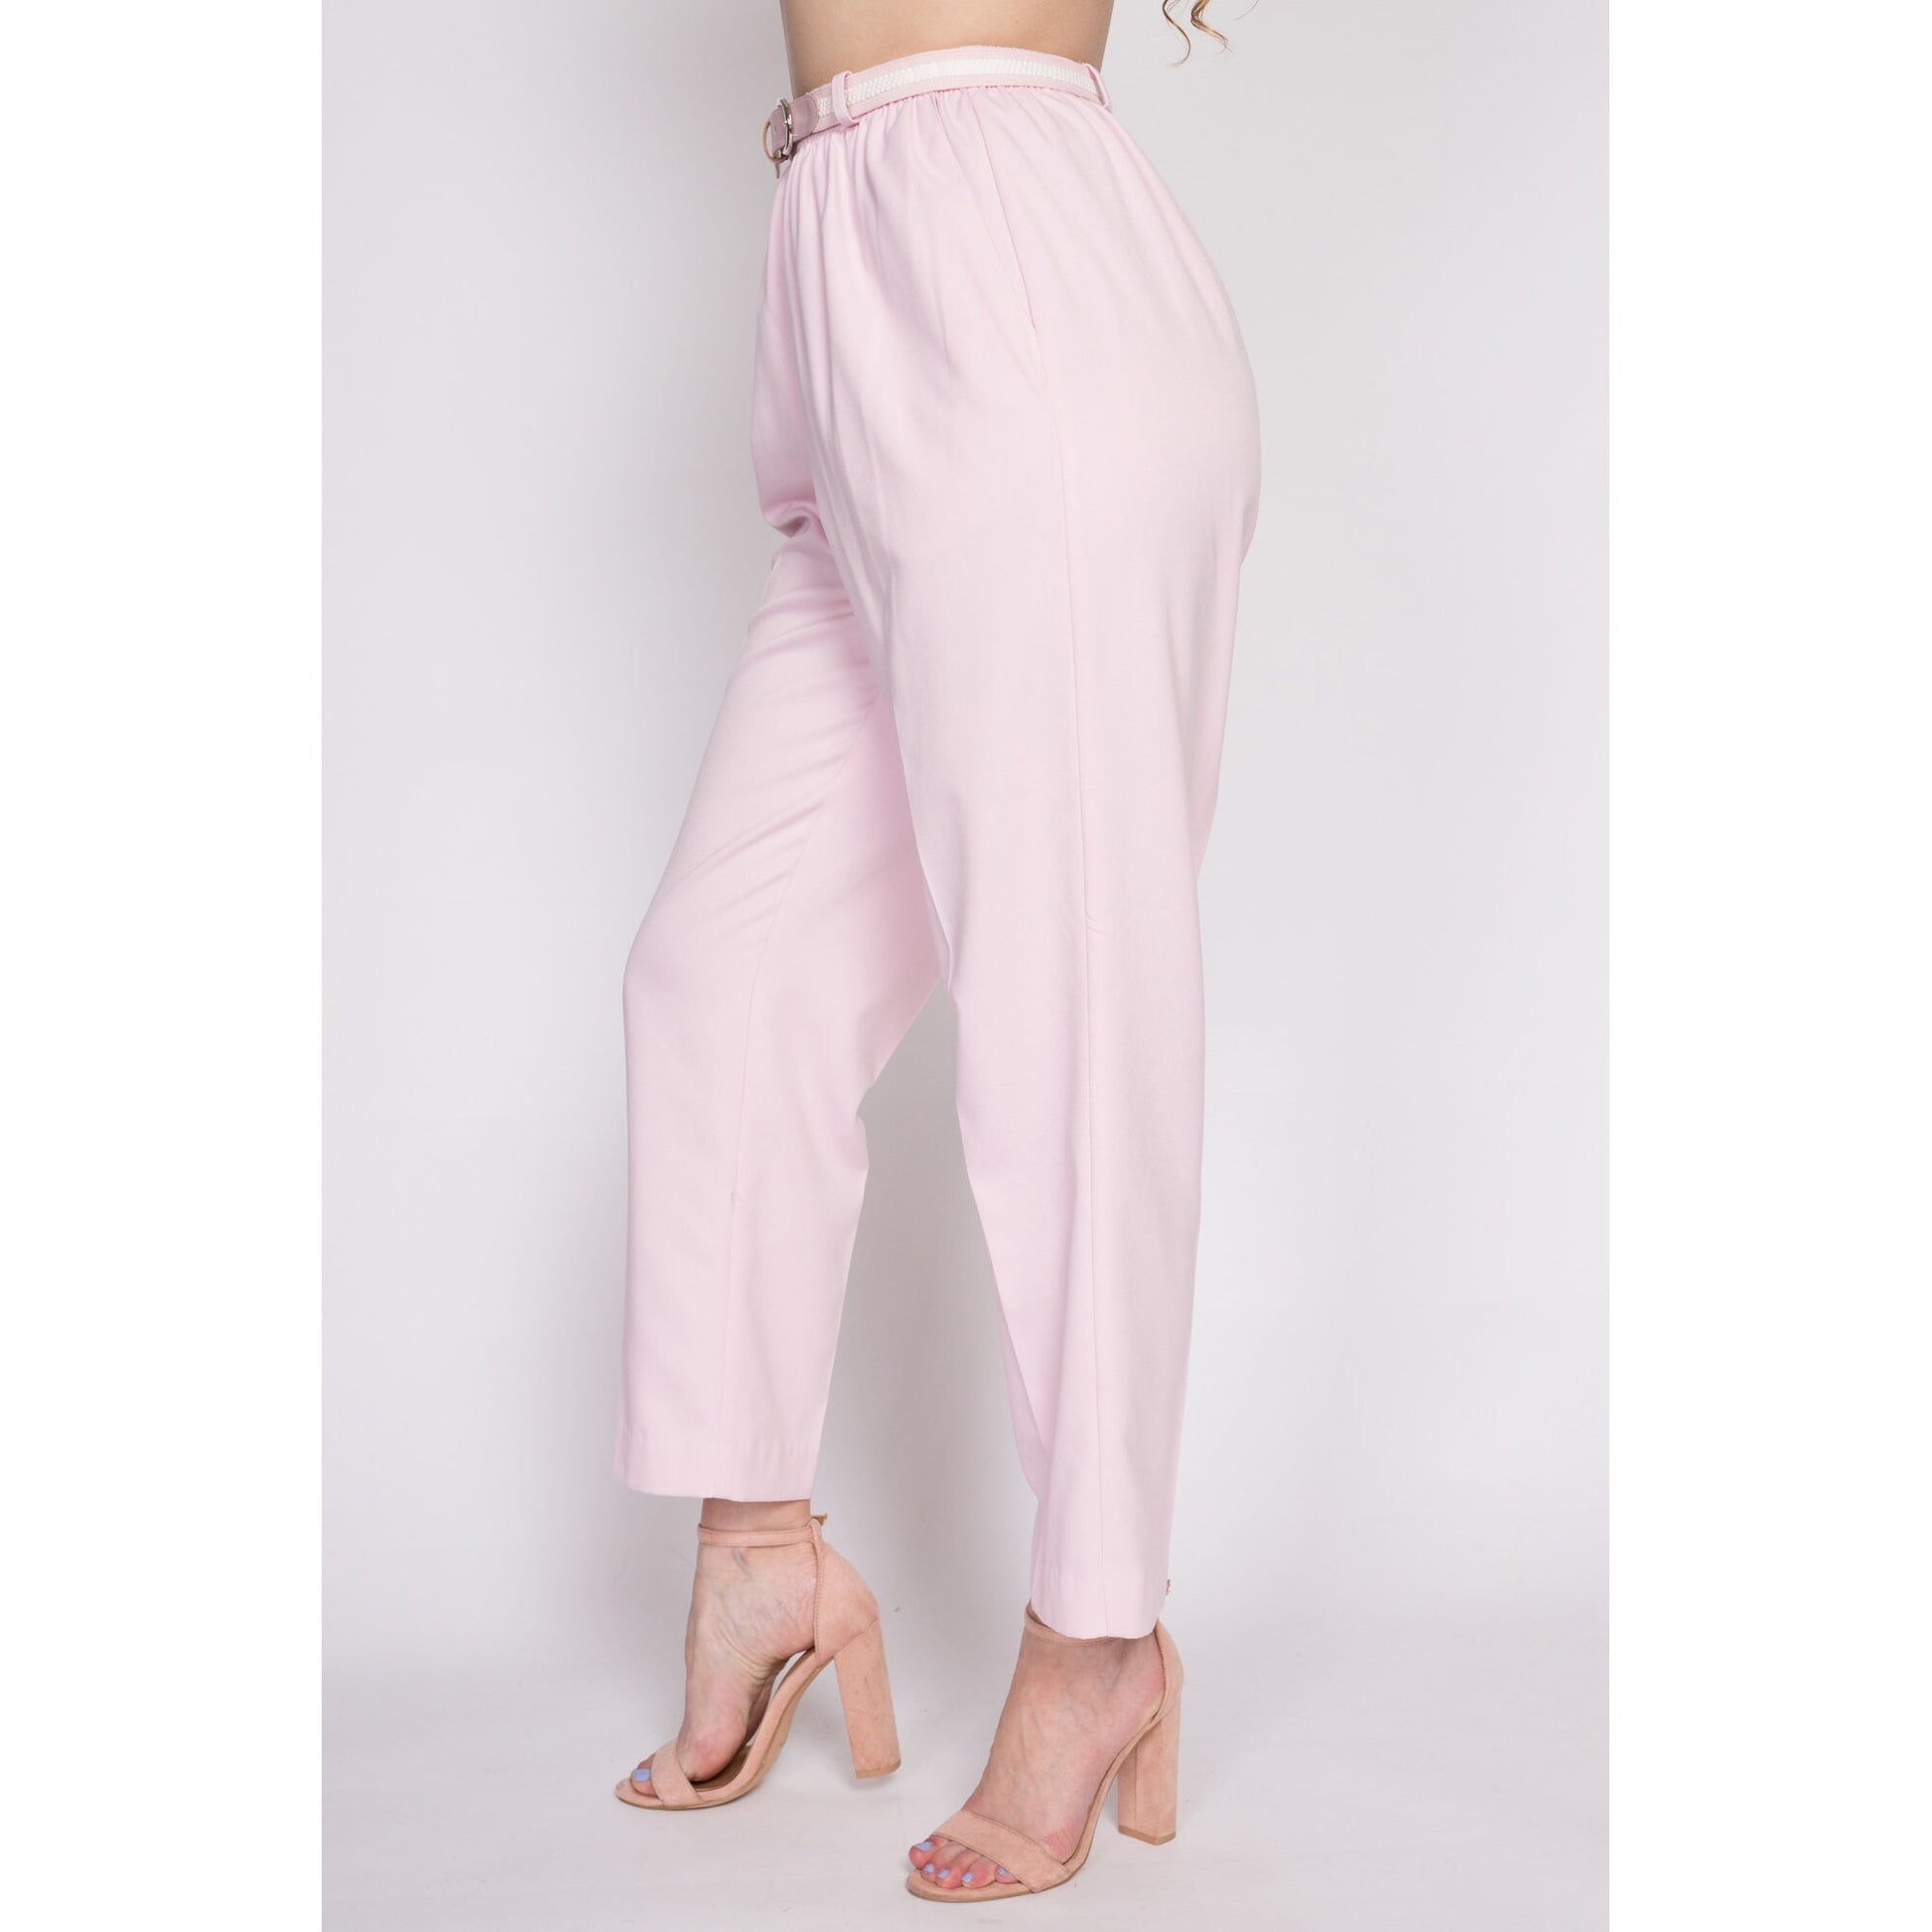  Pink High Waisted Pants